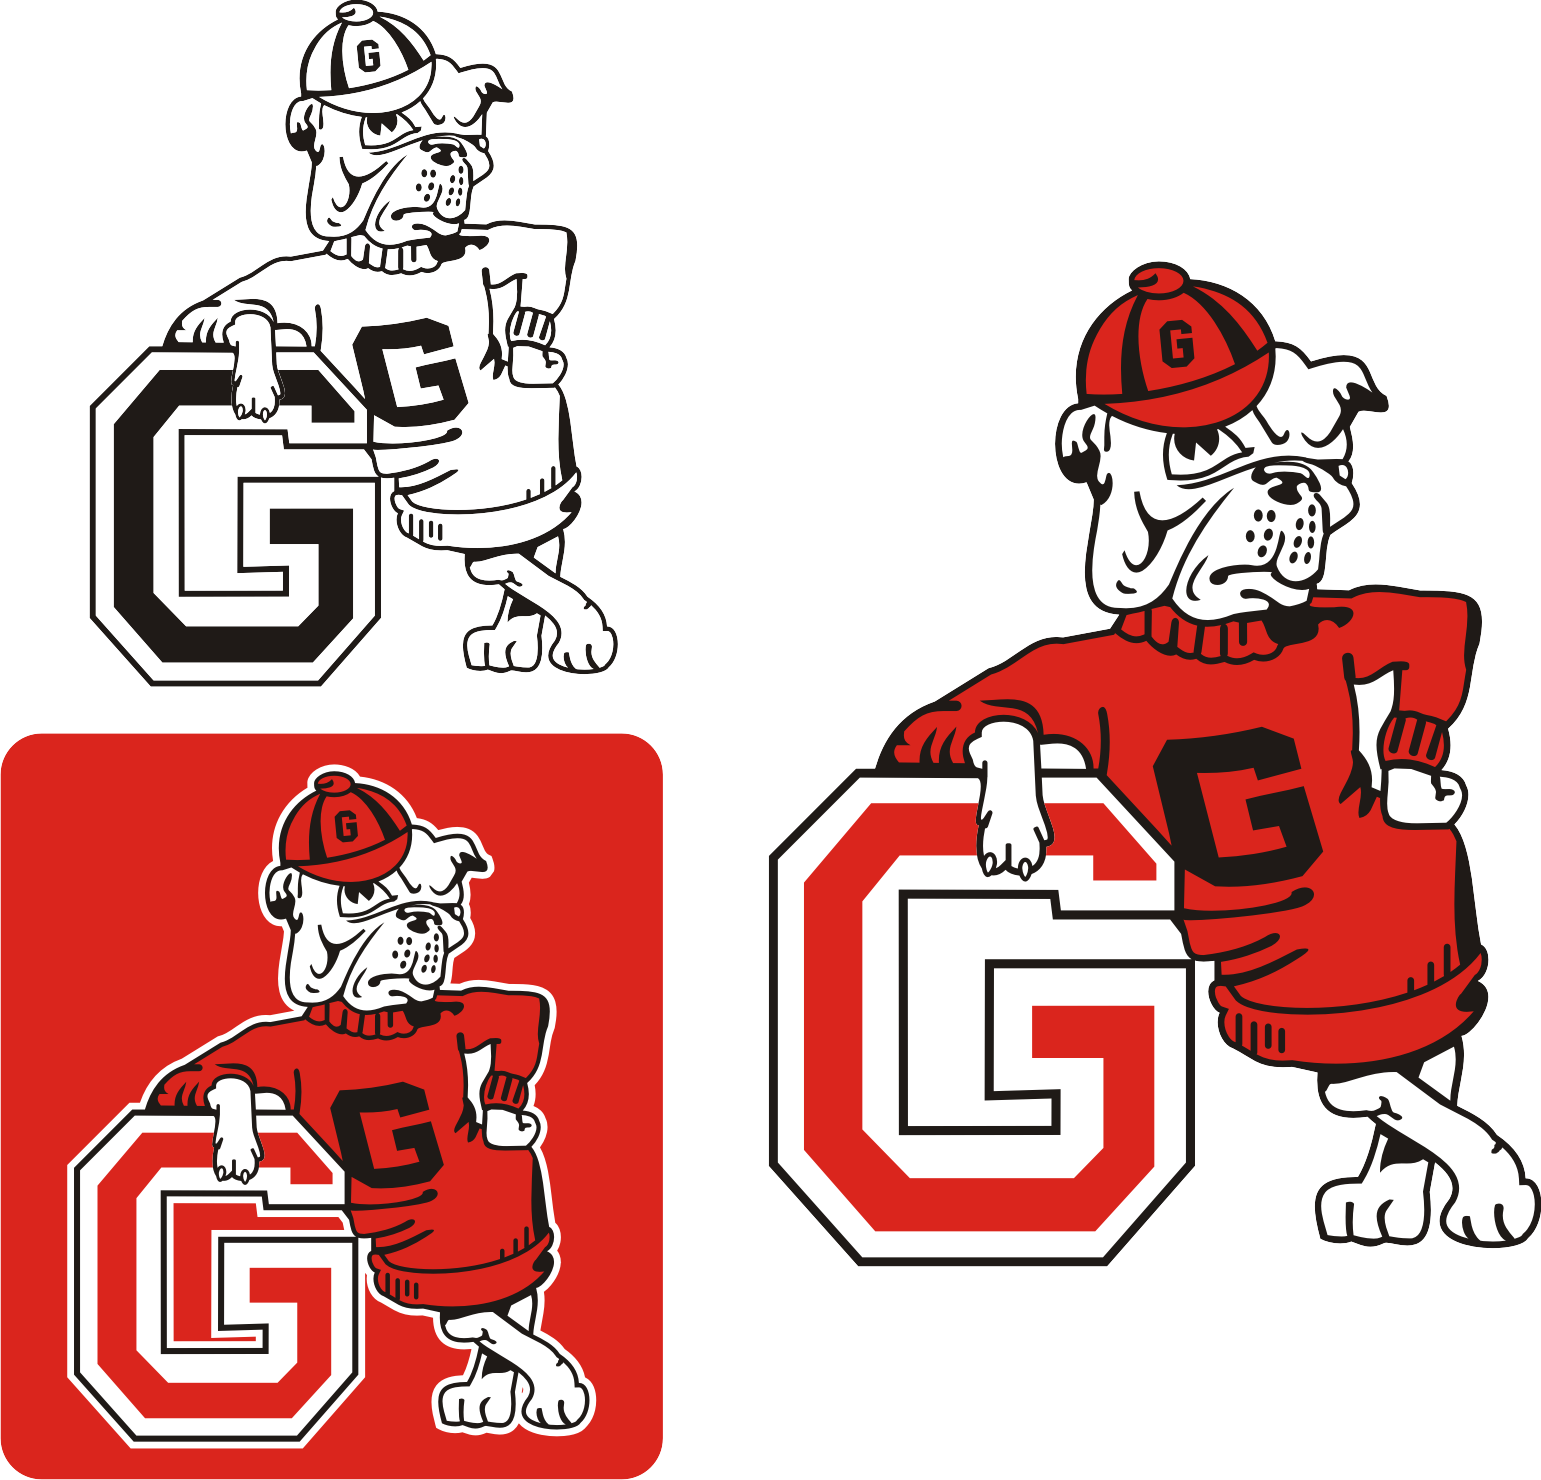 Georgia Bulldogs Mascot Variations PNG image